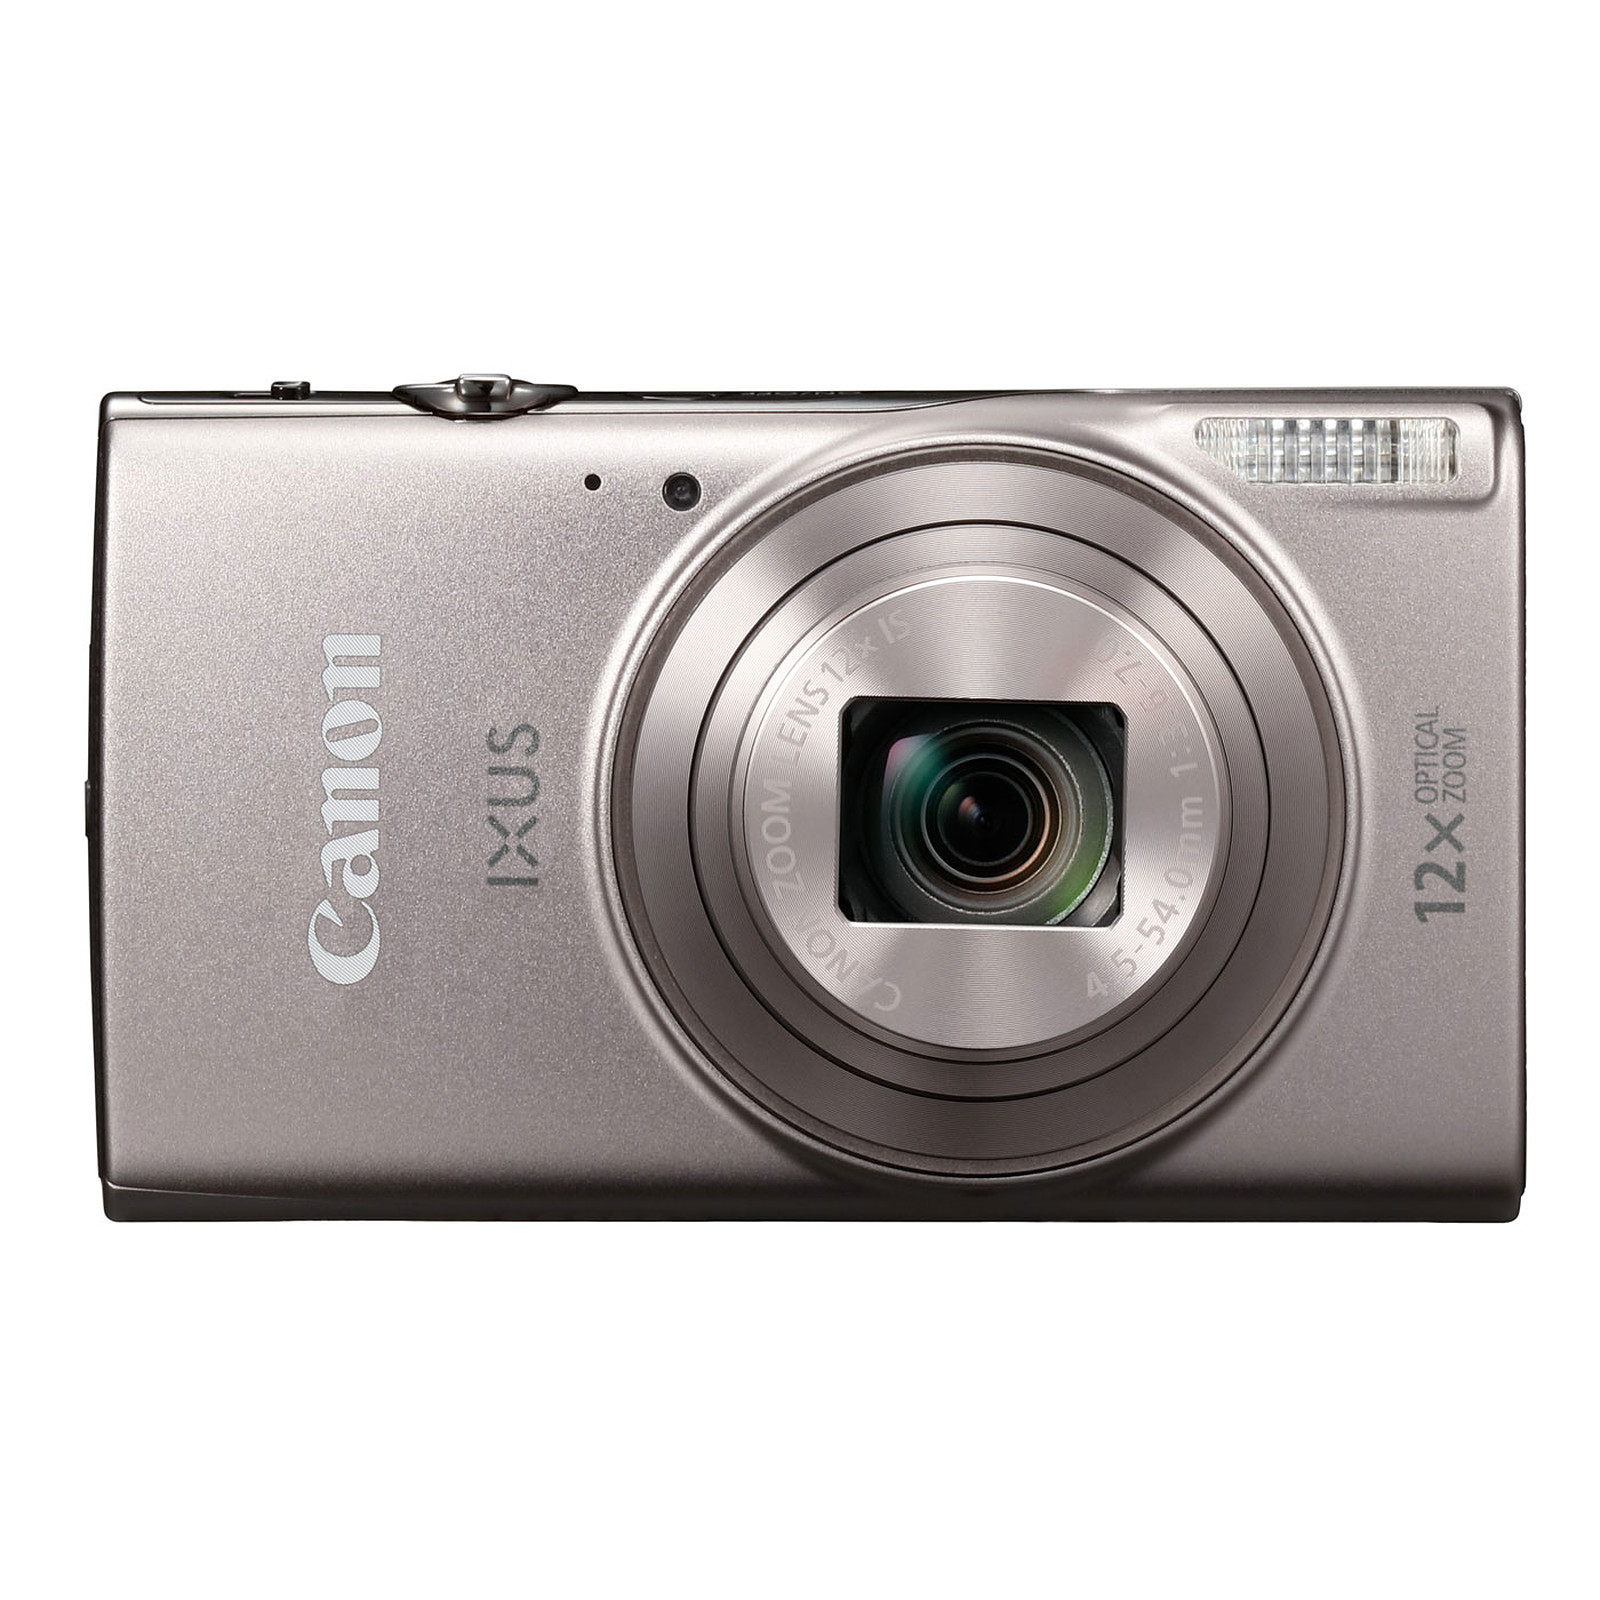 Canon Ixus 285 HS Silver, 1079C001 (International Version) - image 1 of 2